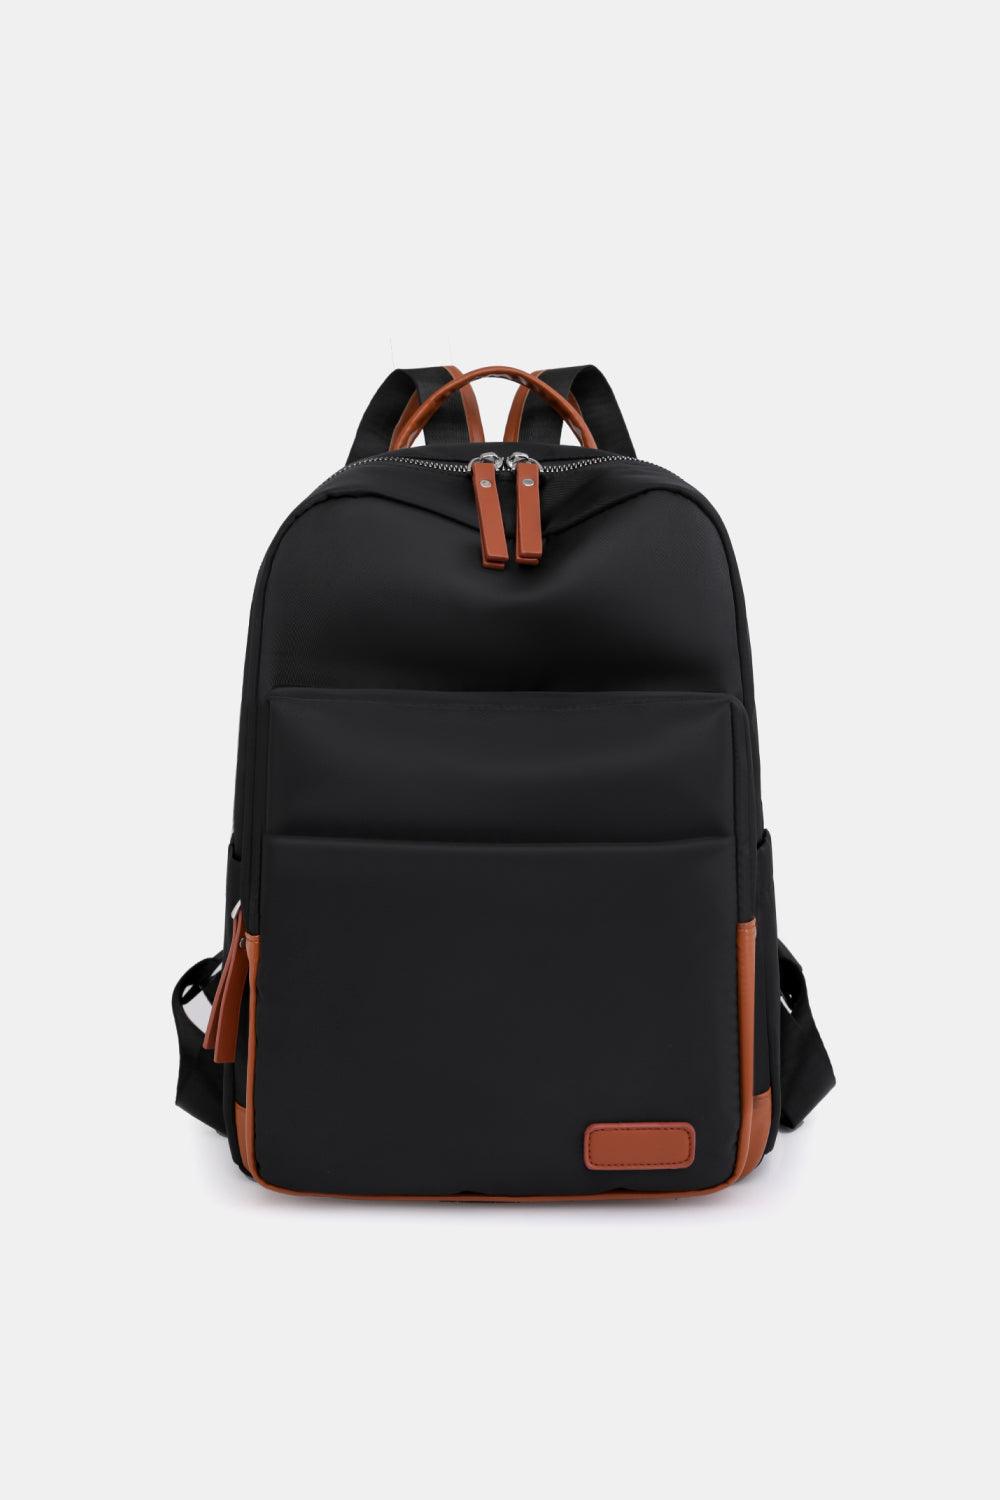 Medium Nylon Backpack - Crazy Like a Daisy Boutique #